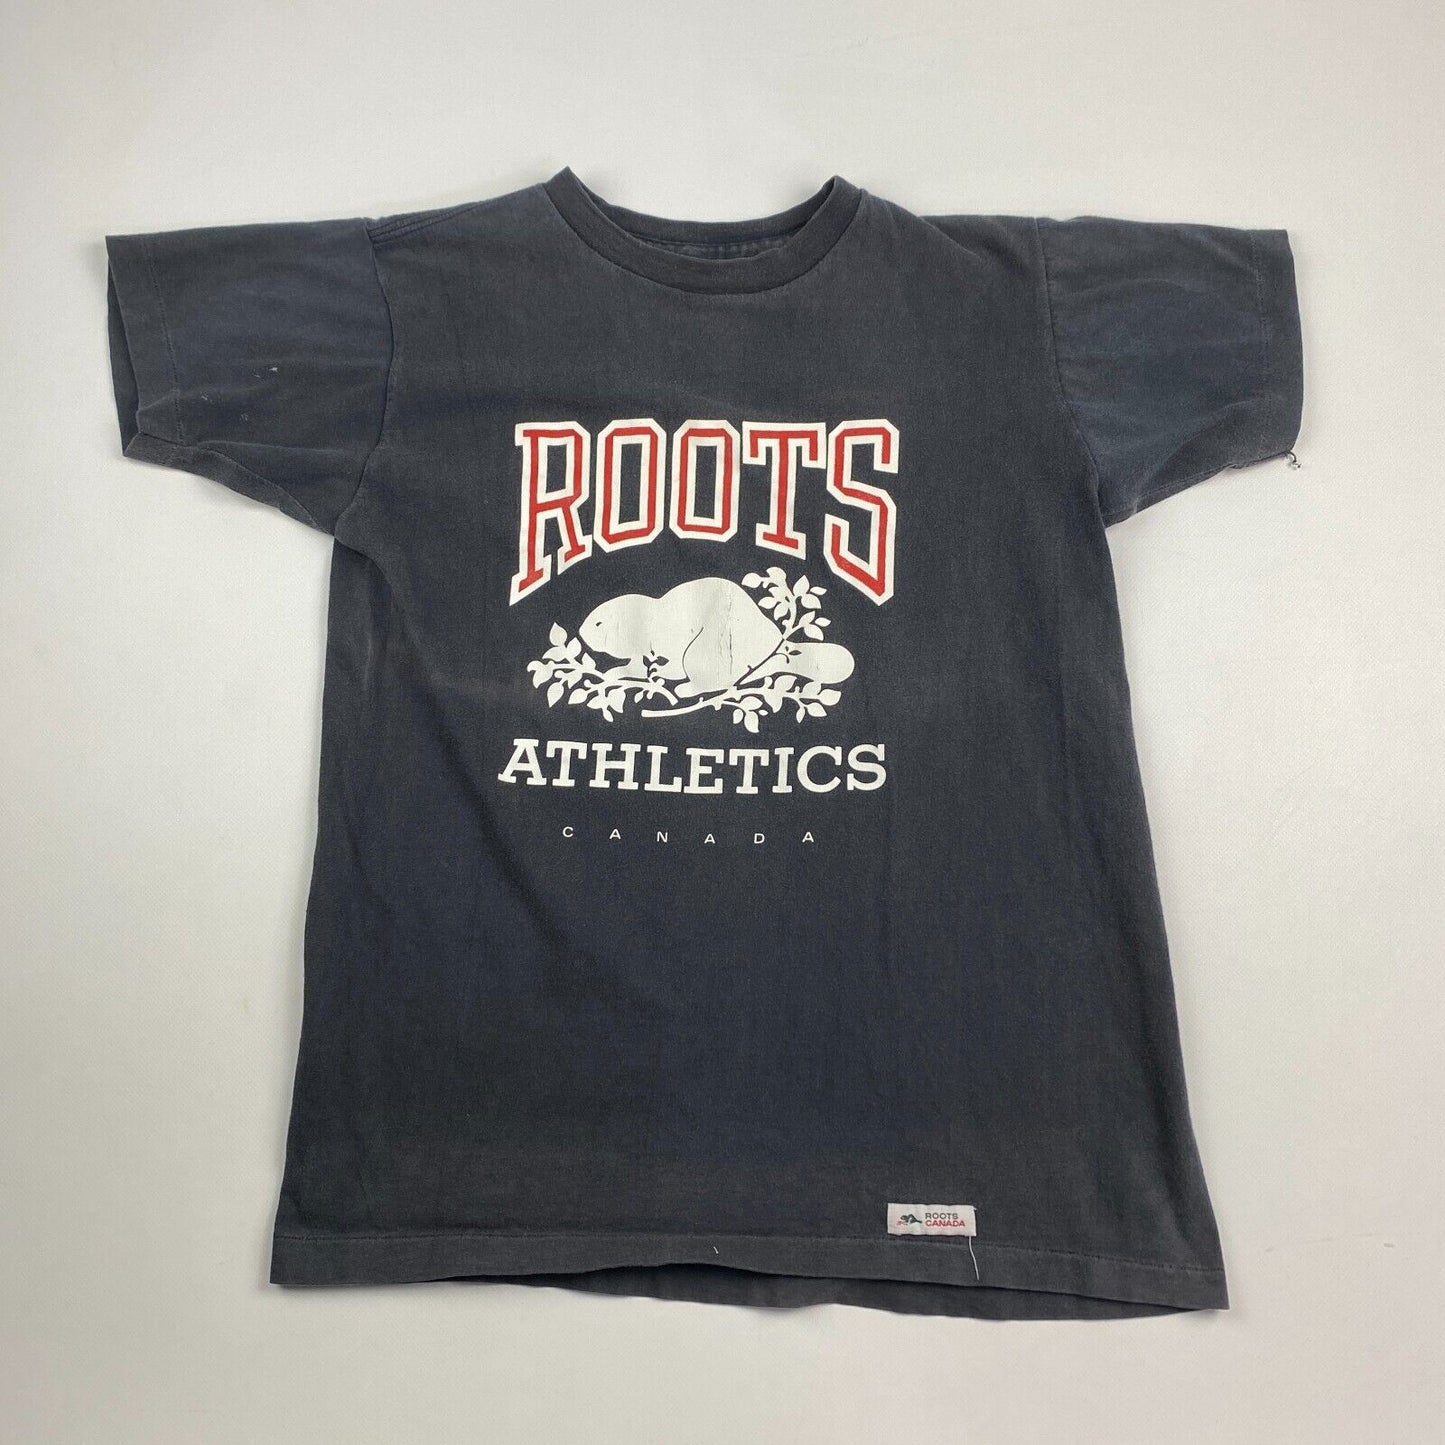 VINTAGE 90s ROOTS Athletics Canada Faded Black T-Shirt sz Small Men